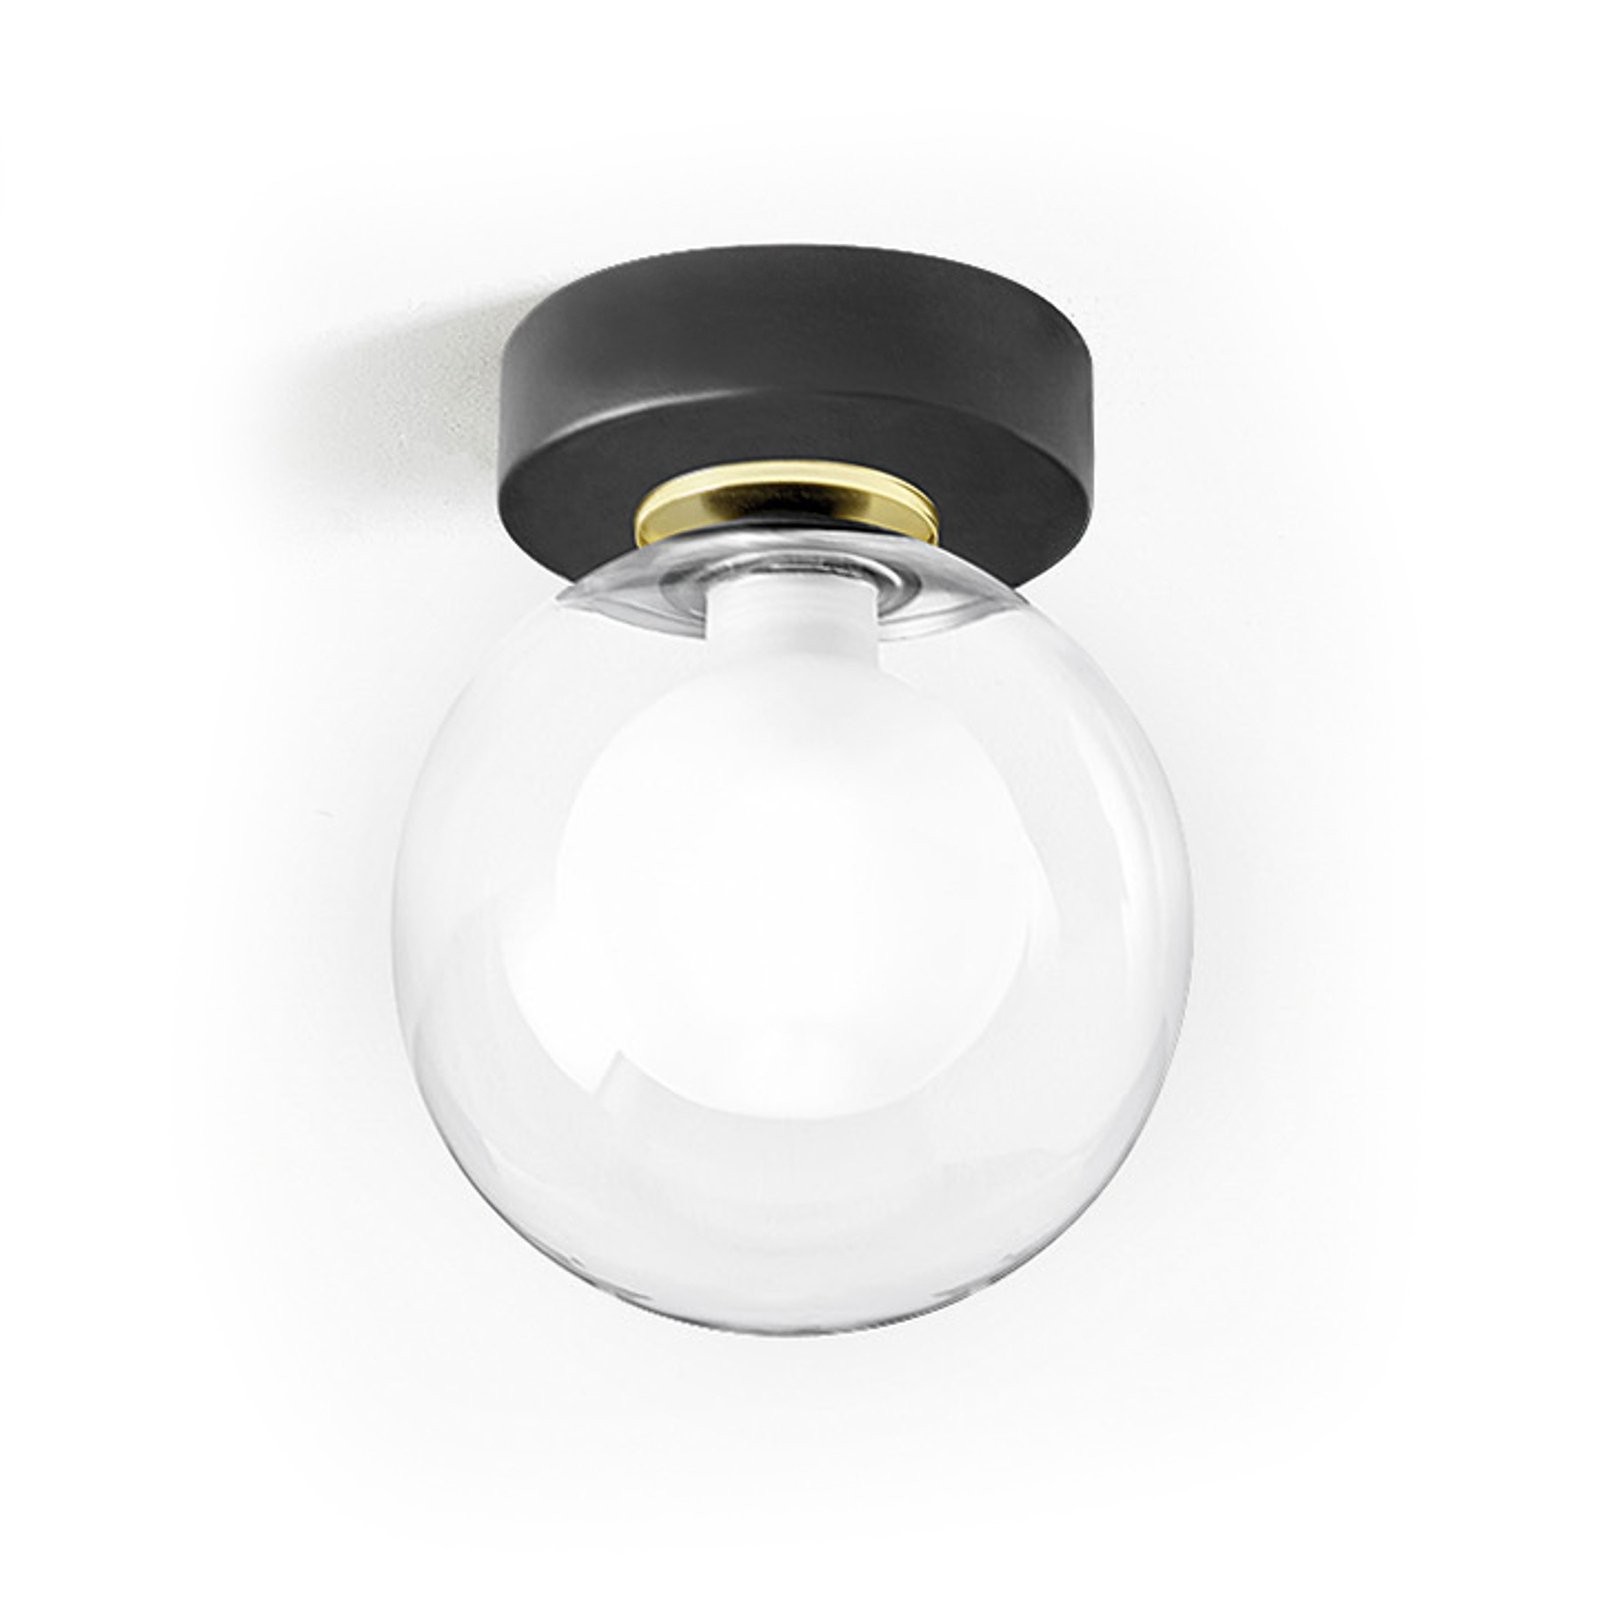 Cosmo ceiling light, 1-bulb, black